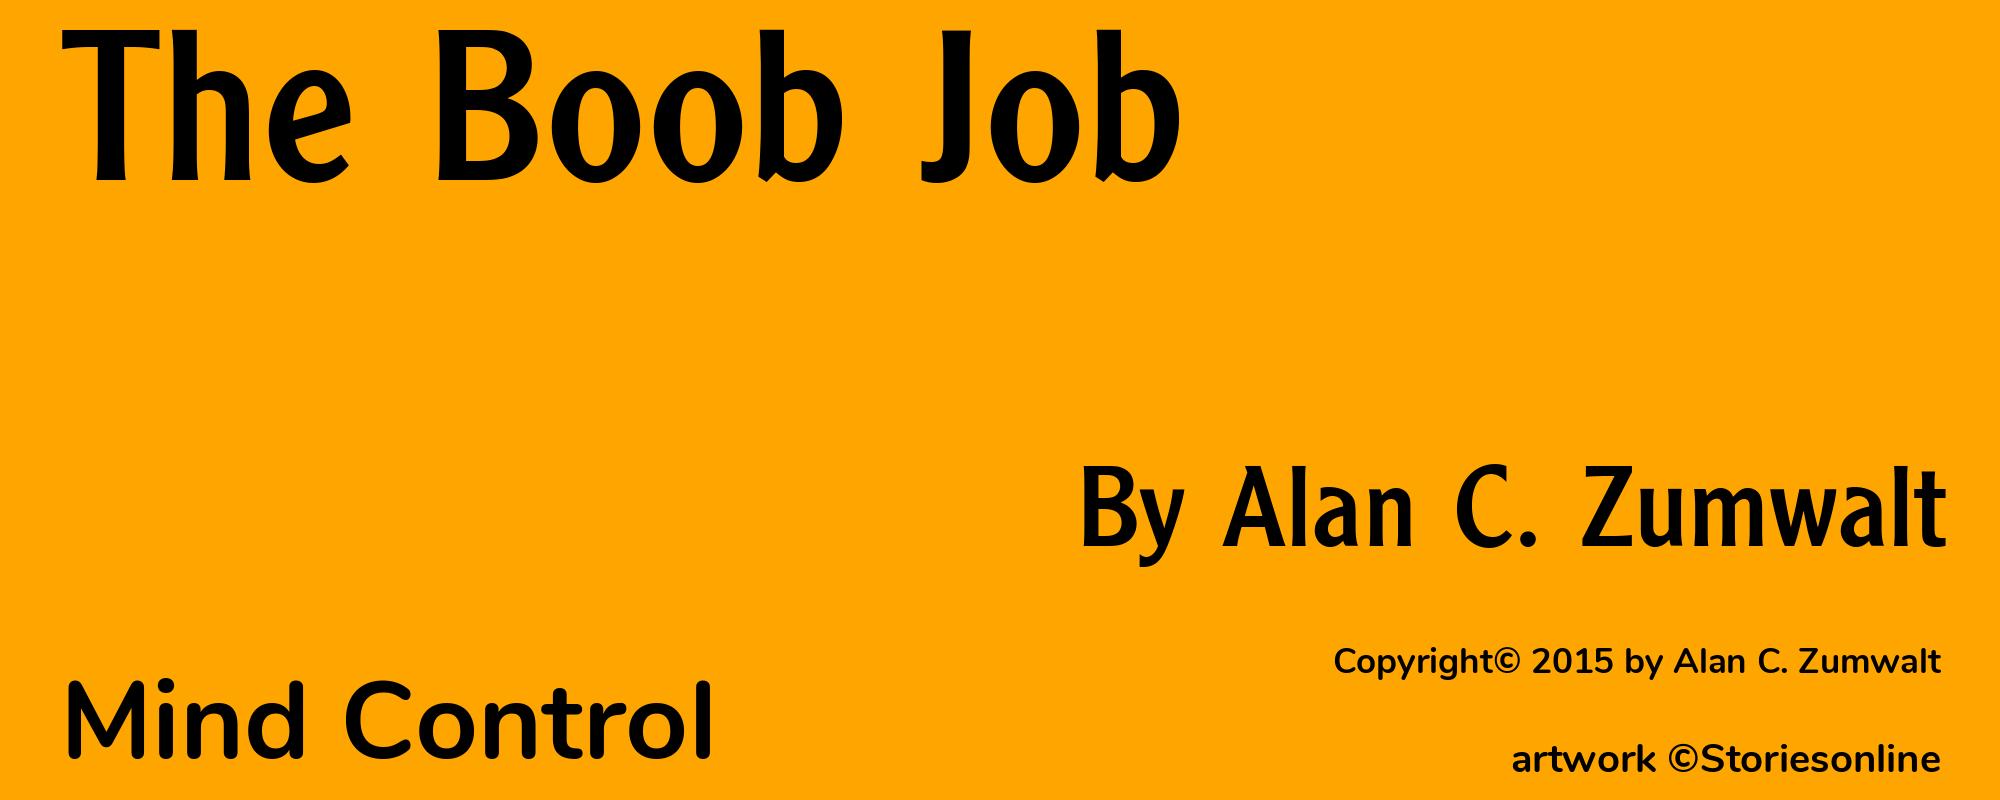 The Boob Job - Cover